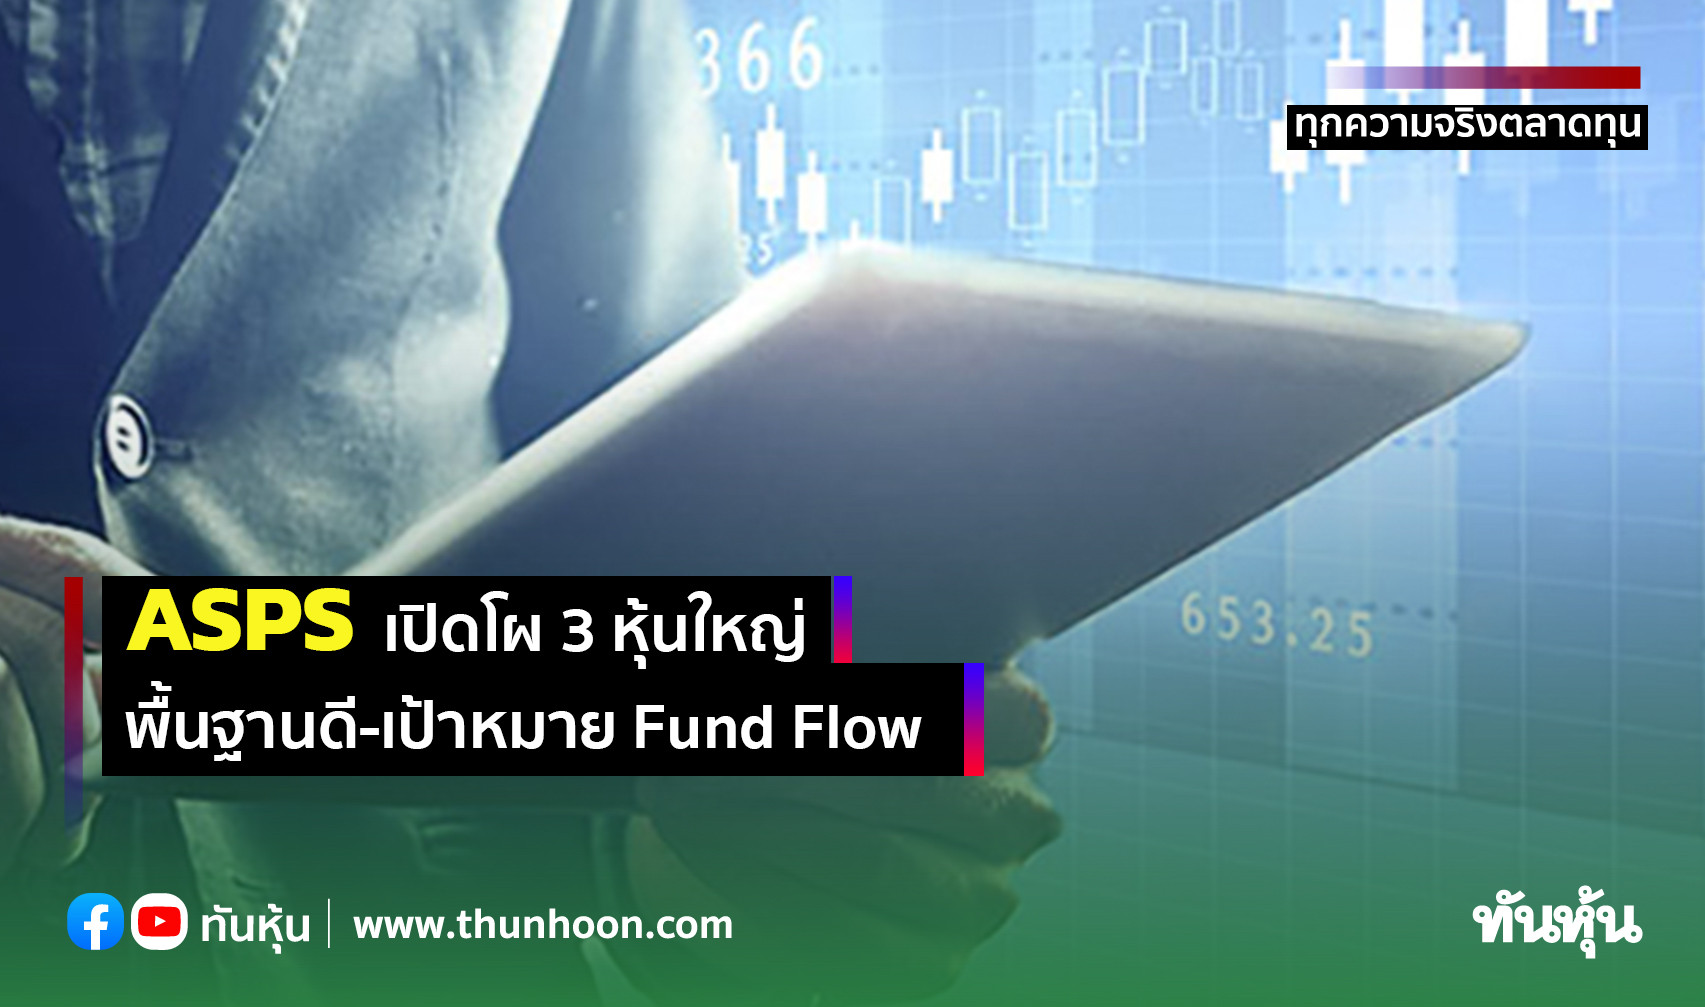 ASPS เปิดโผ 3 หุ้นใหญ่พื้นฐานดี-เป้าหมาย Fund Flow